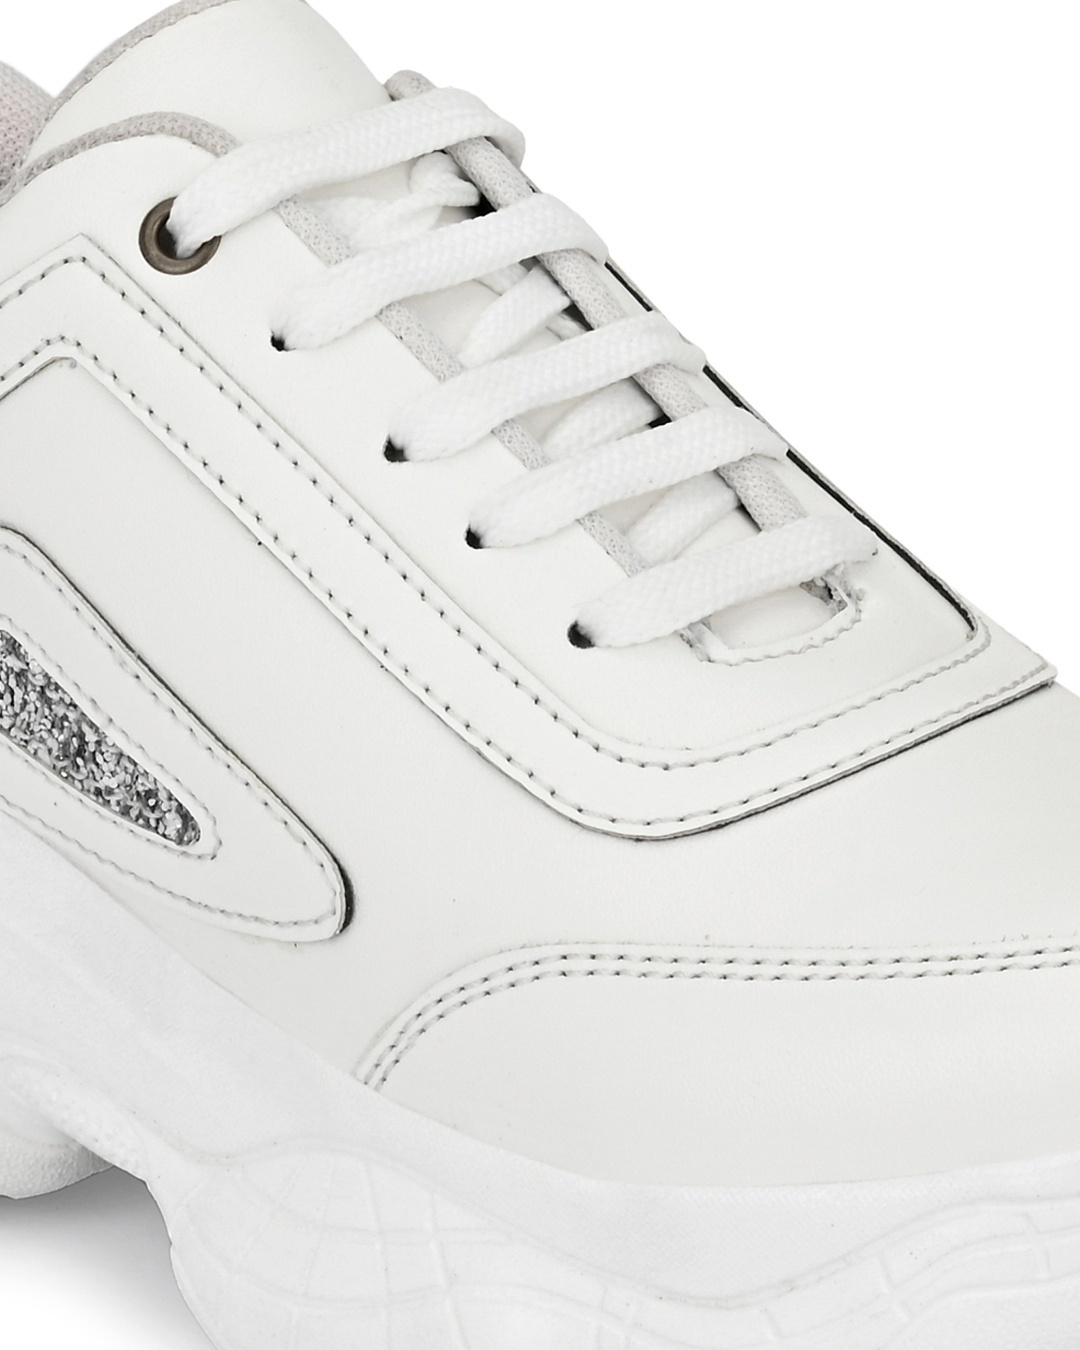 Shop Women's White Lace-Ups Sneakers